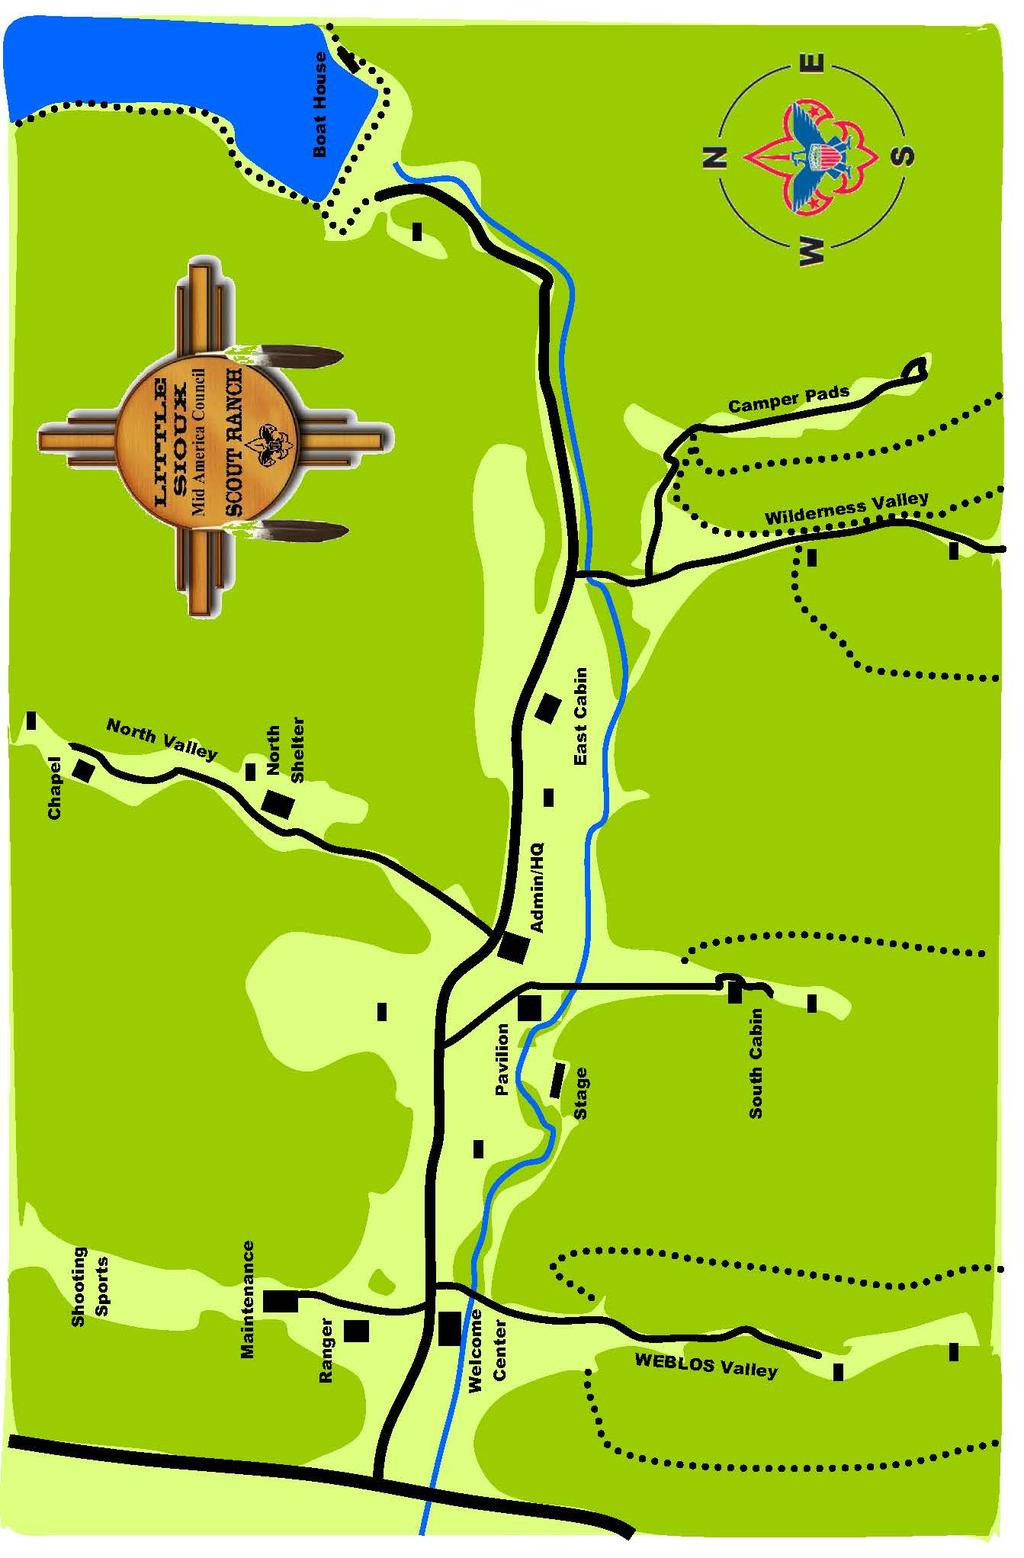 Camp Map